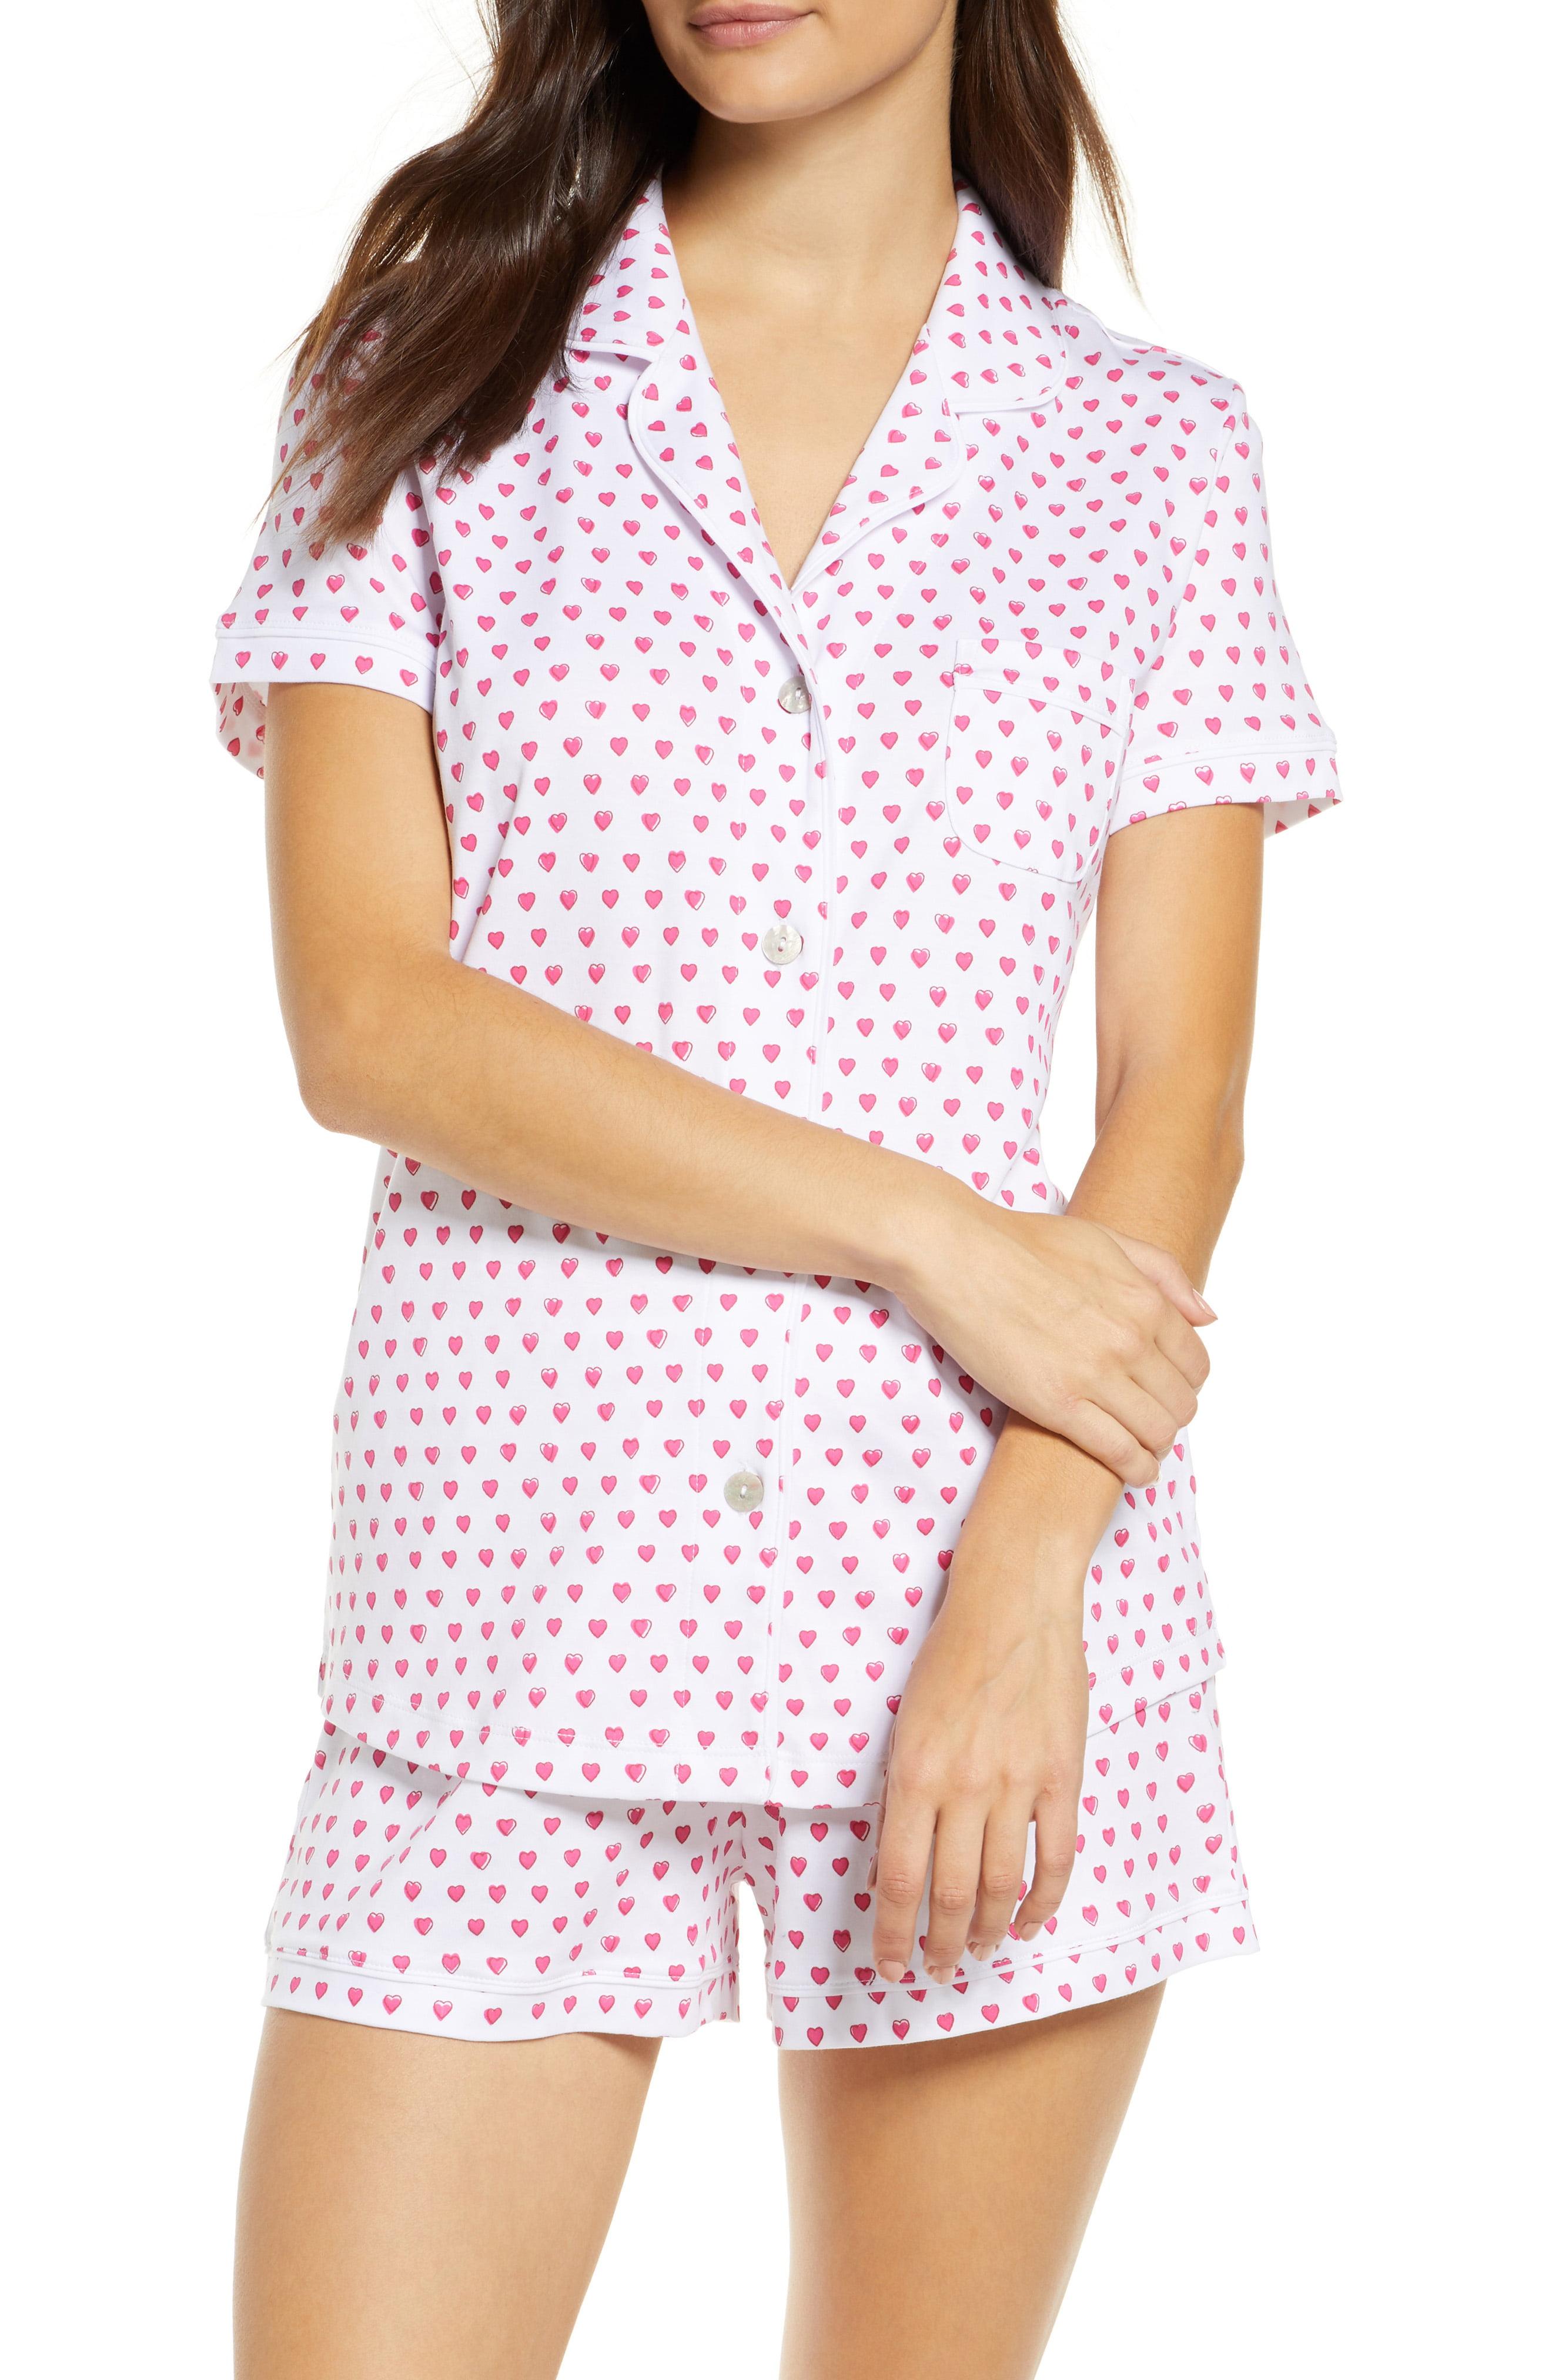 Roberta Roller Rabbit Cotton Heart Short Pajamas in Pink - Lyst